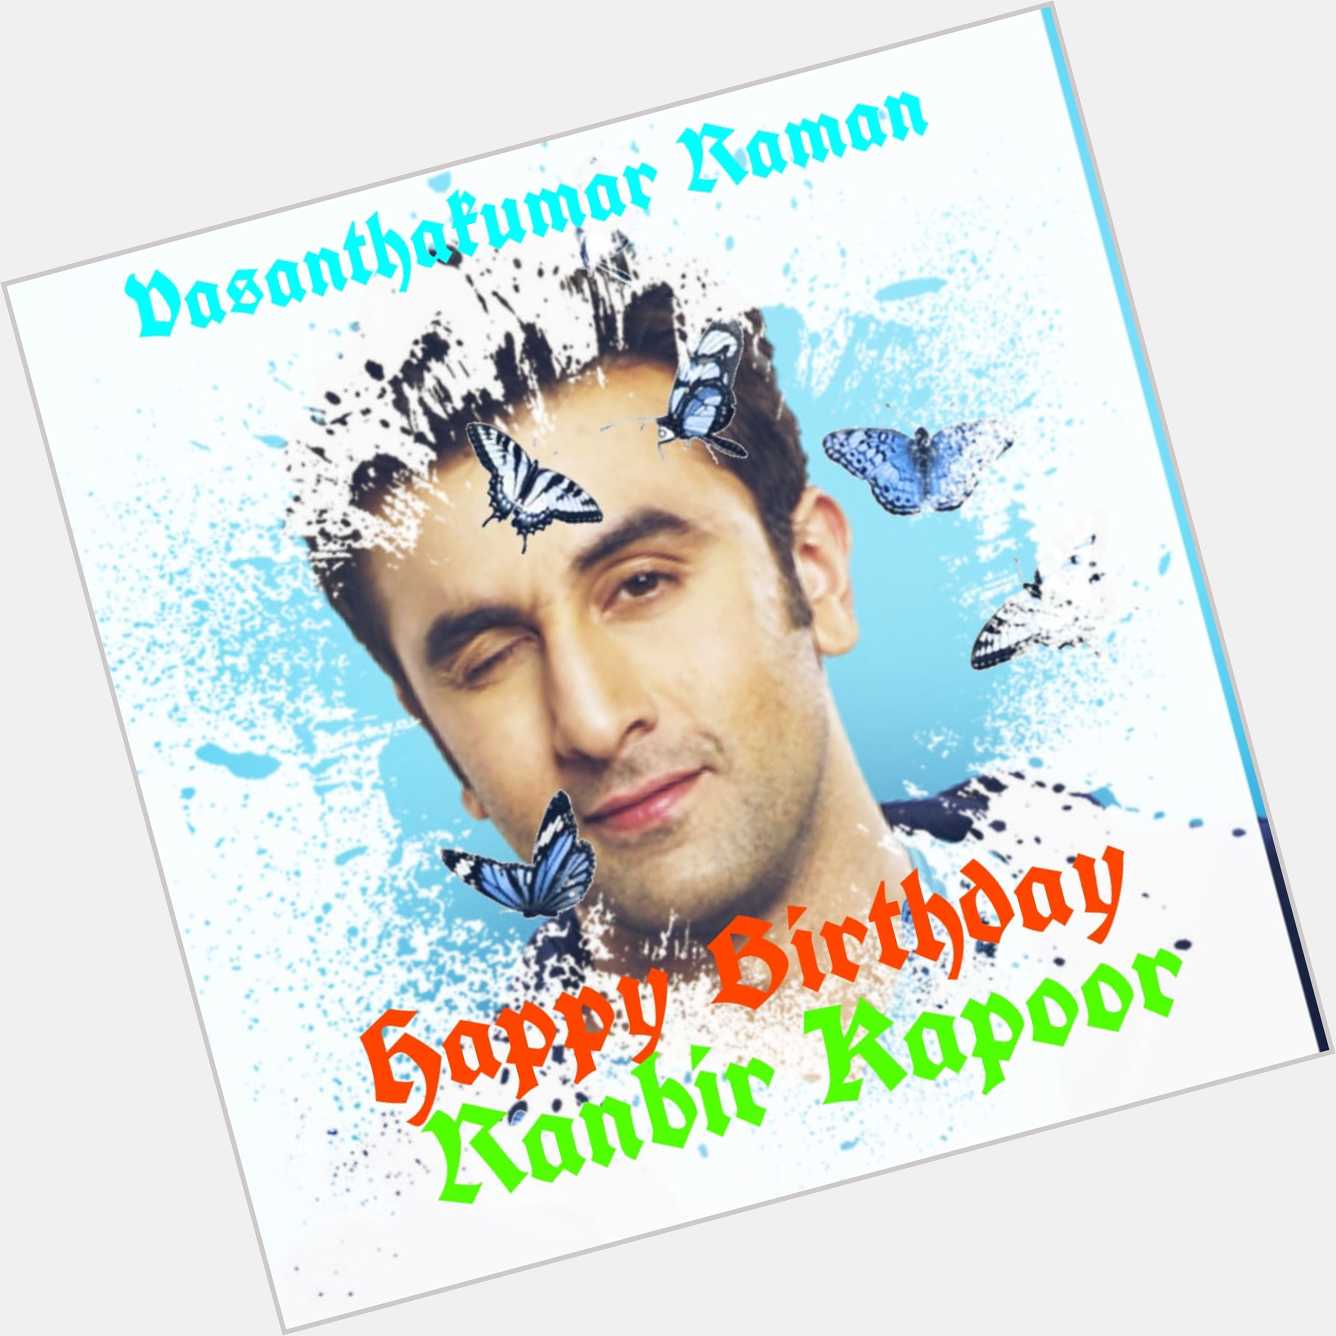 Happy birthday Ranbir Kapoor 